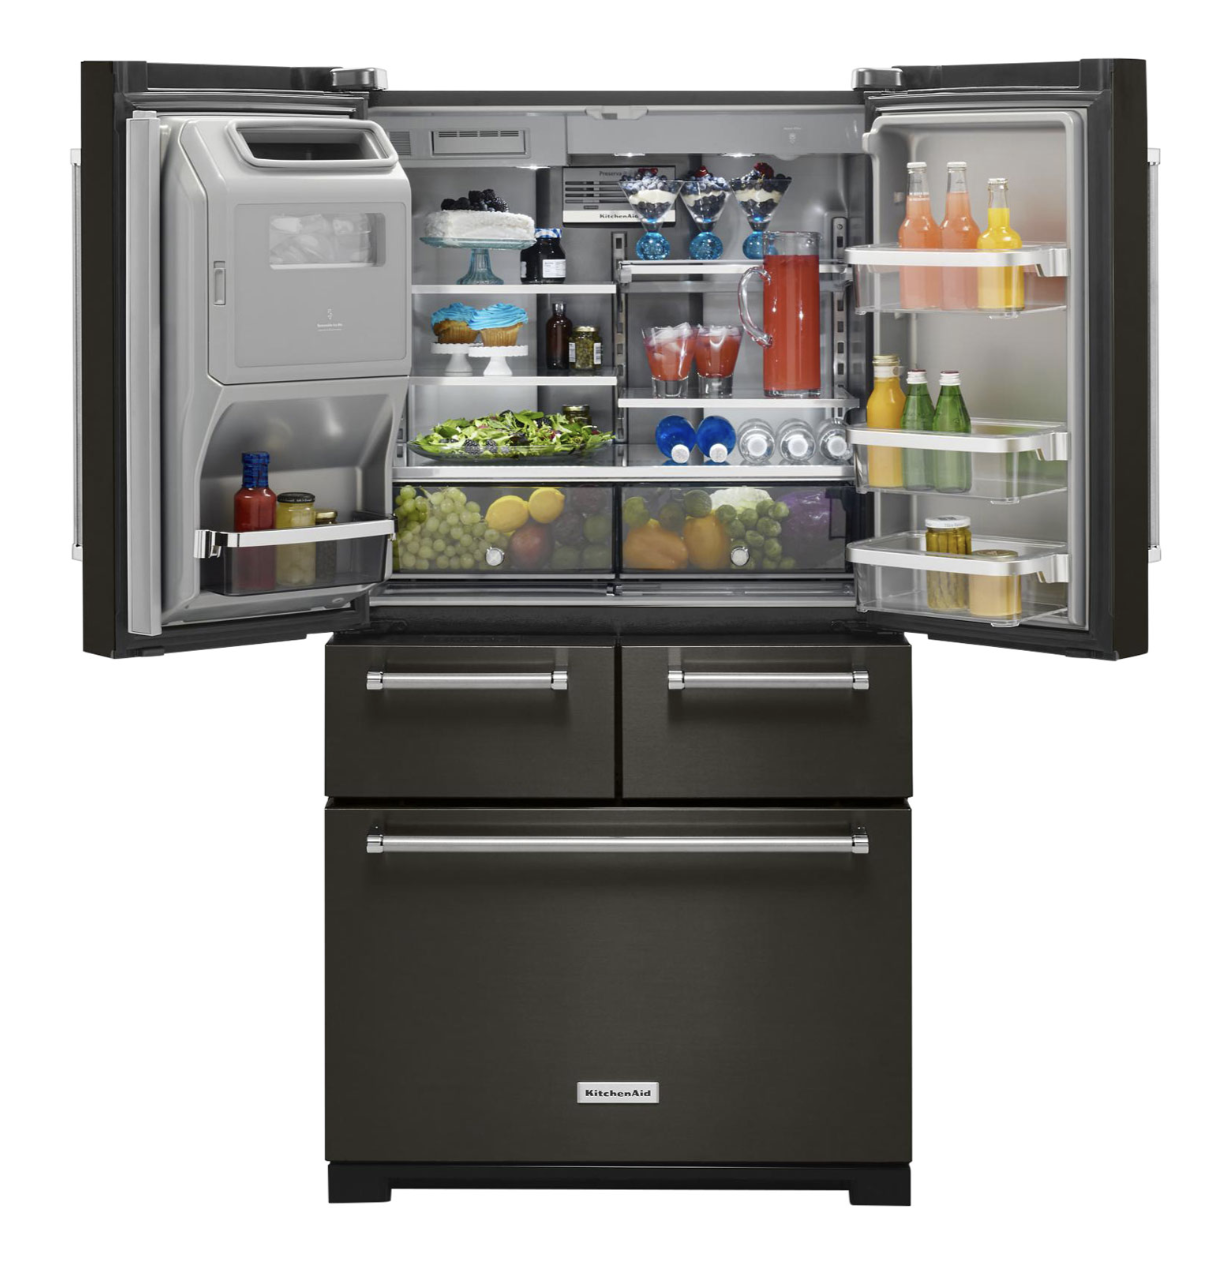 KitchenAid refrigerator with doors open